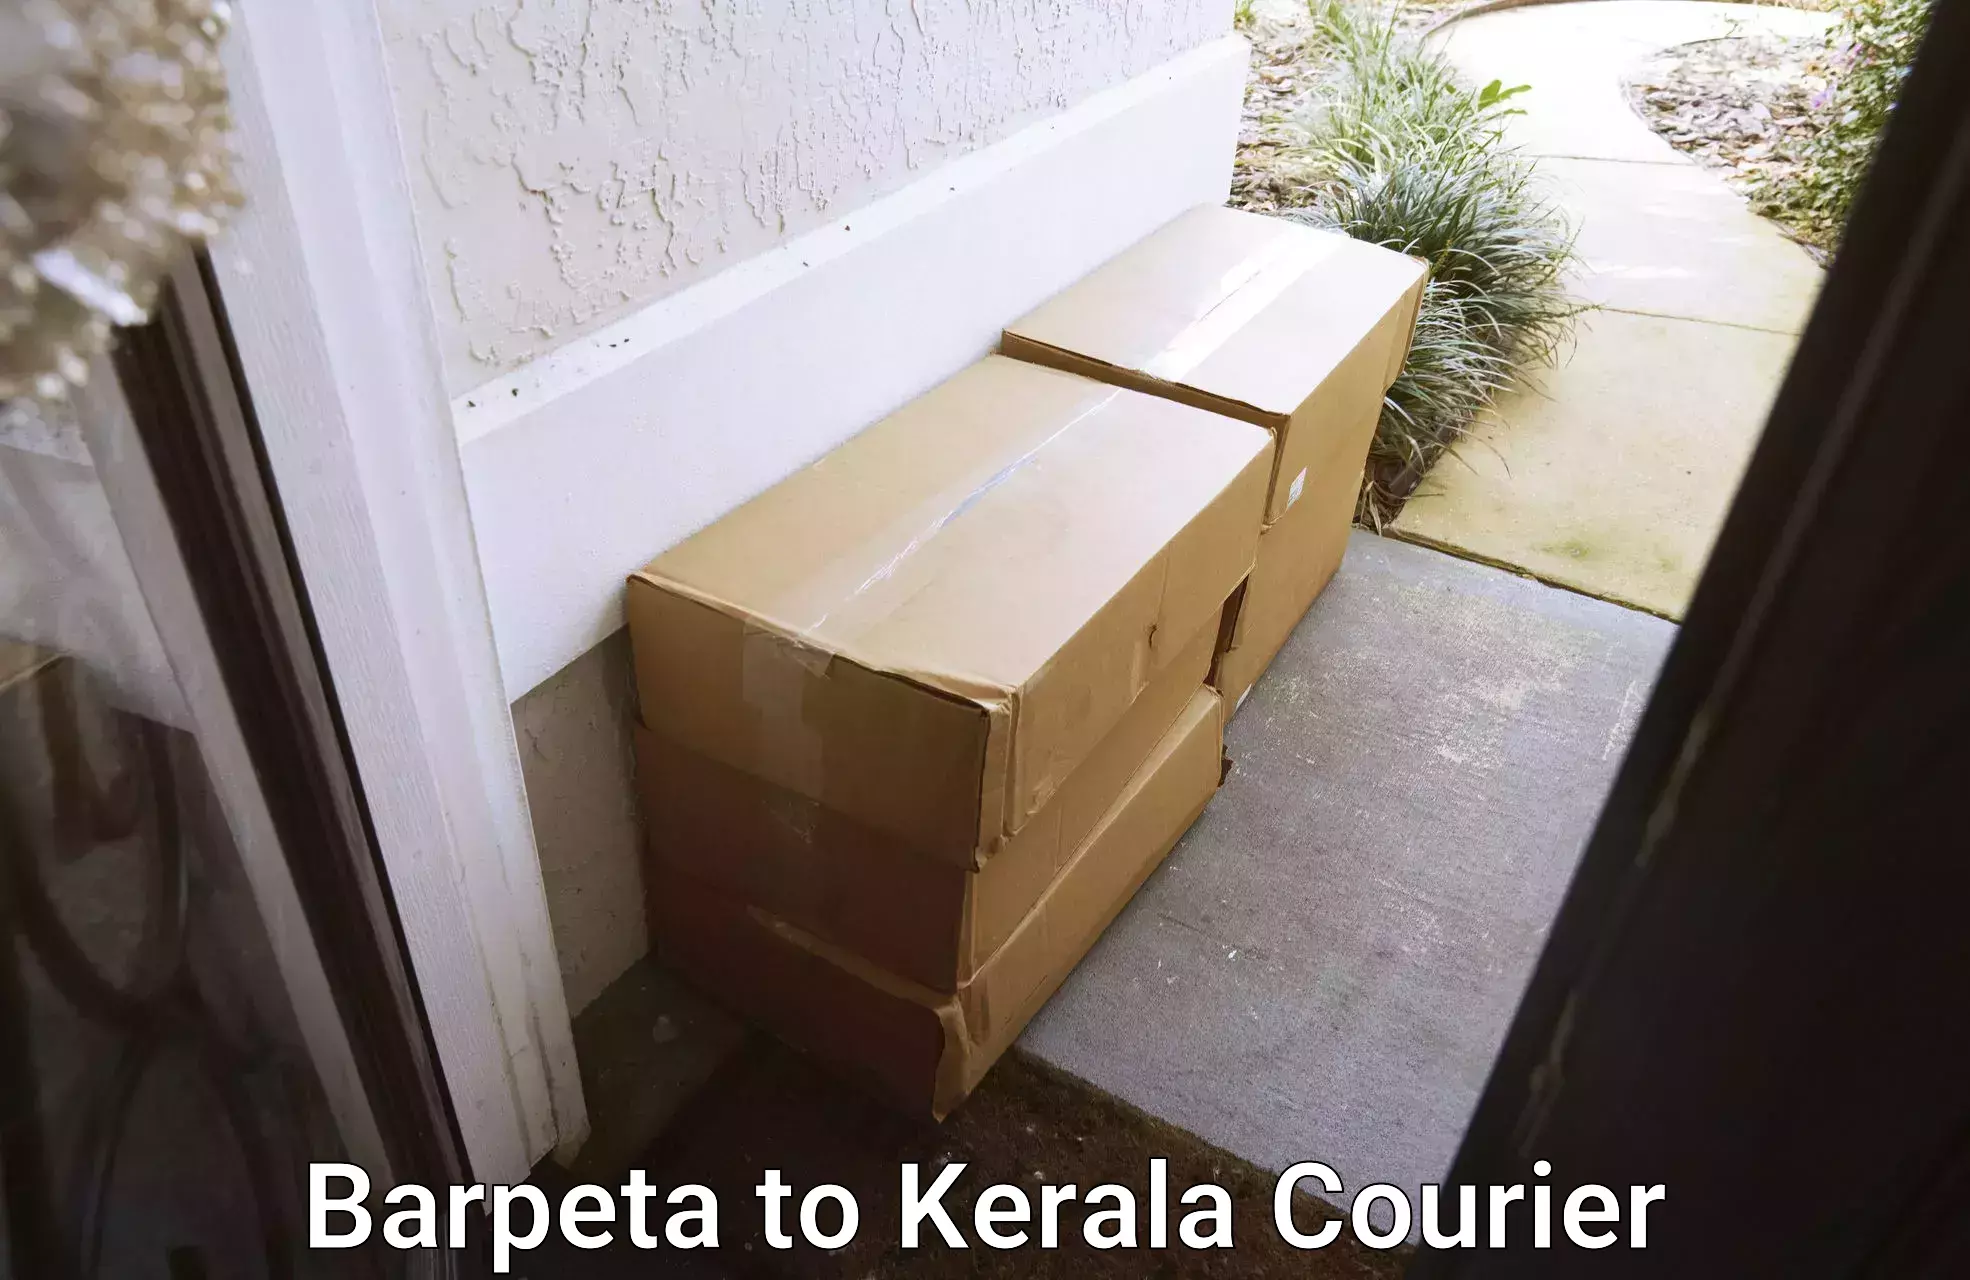 Express delivery capabilities Barpeta to Kottarakkara